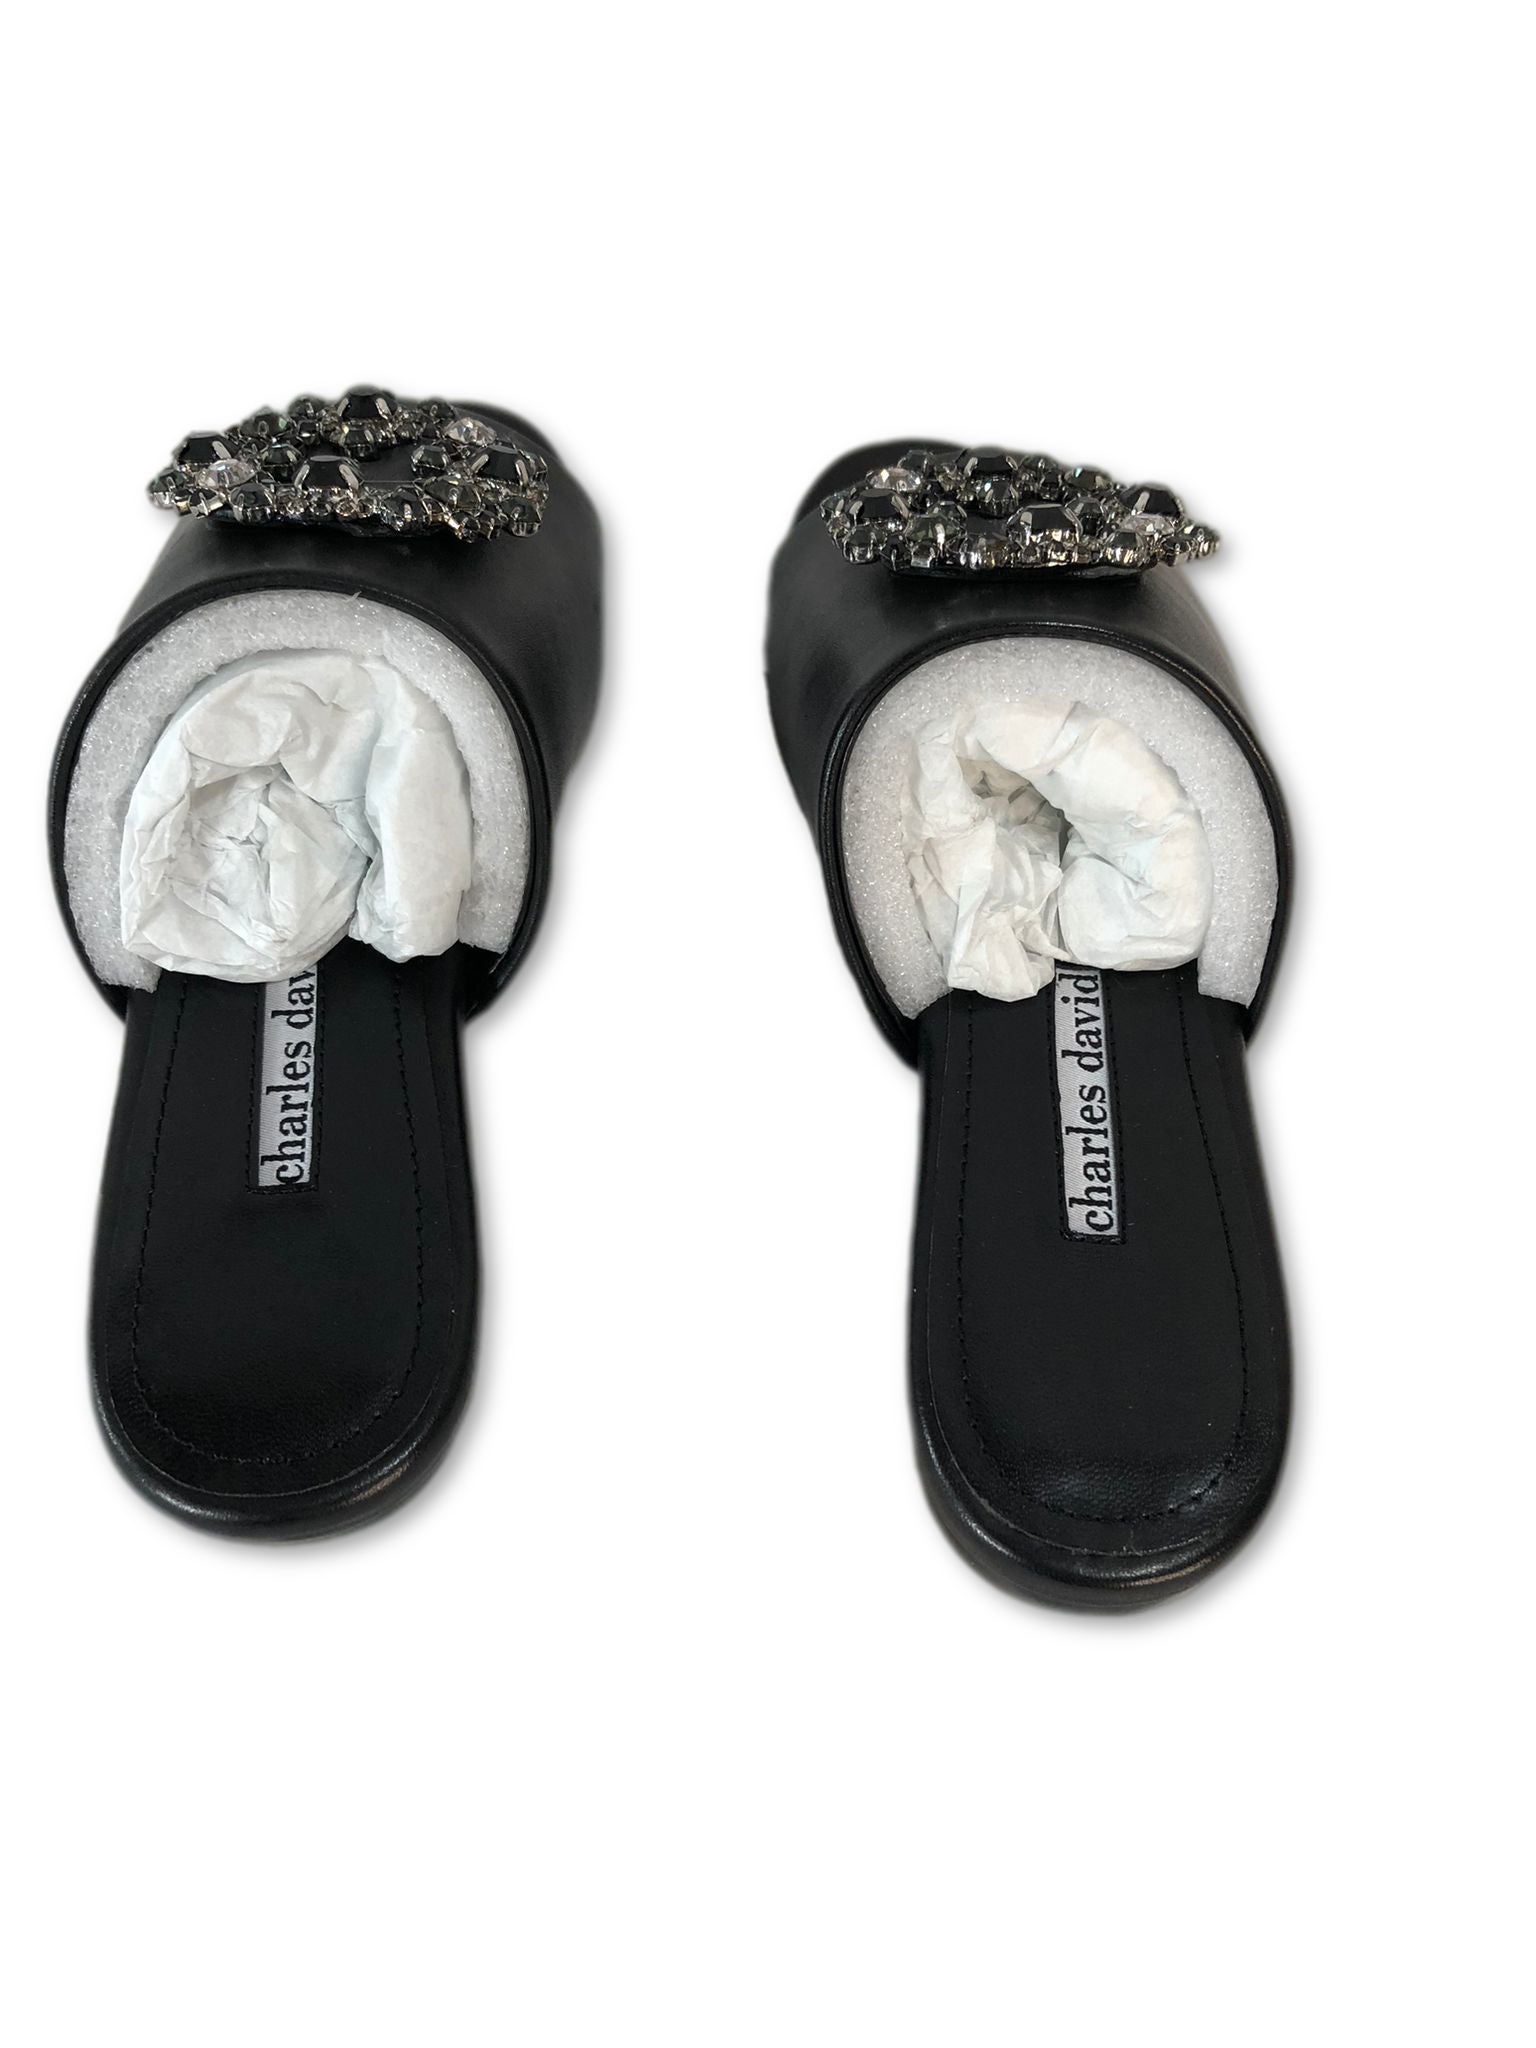 Charles David Soleil Jeweled Slide Sandals - 1/2" Heel 5M